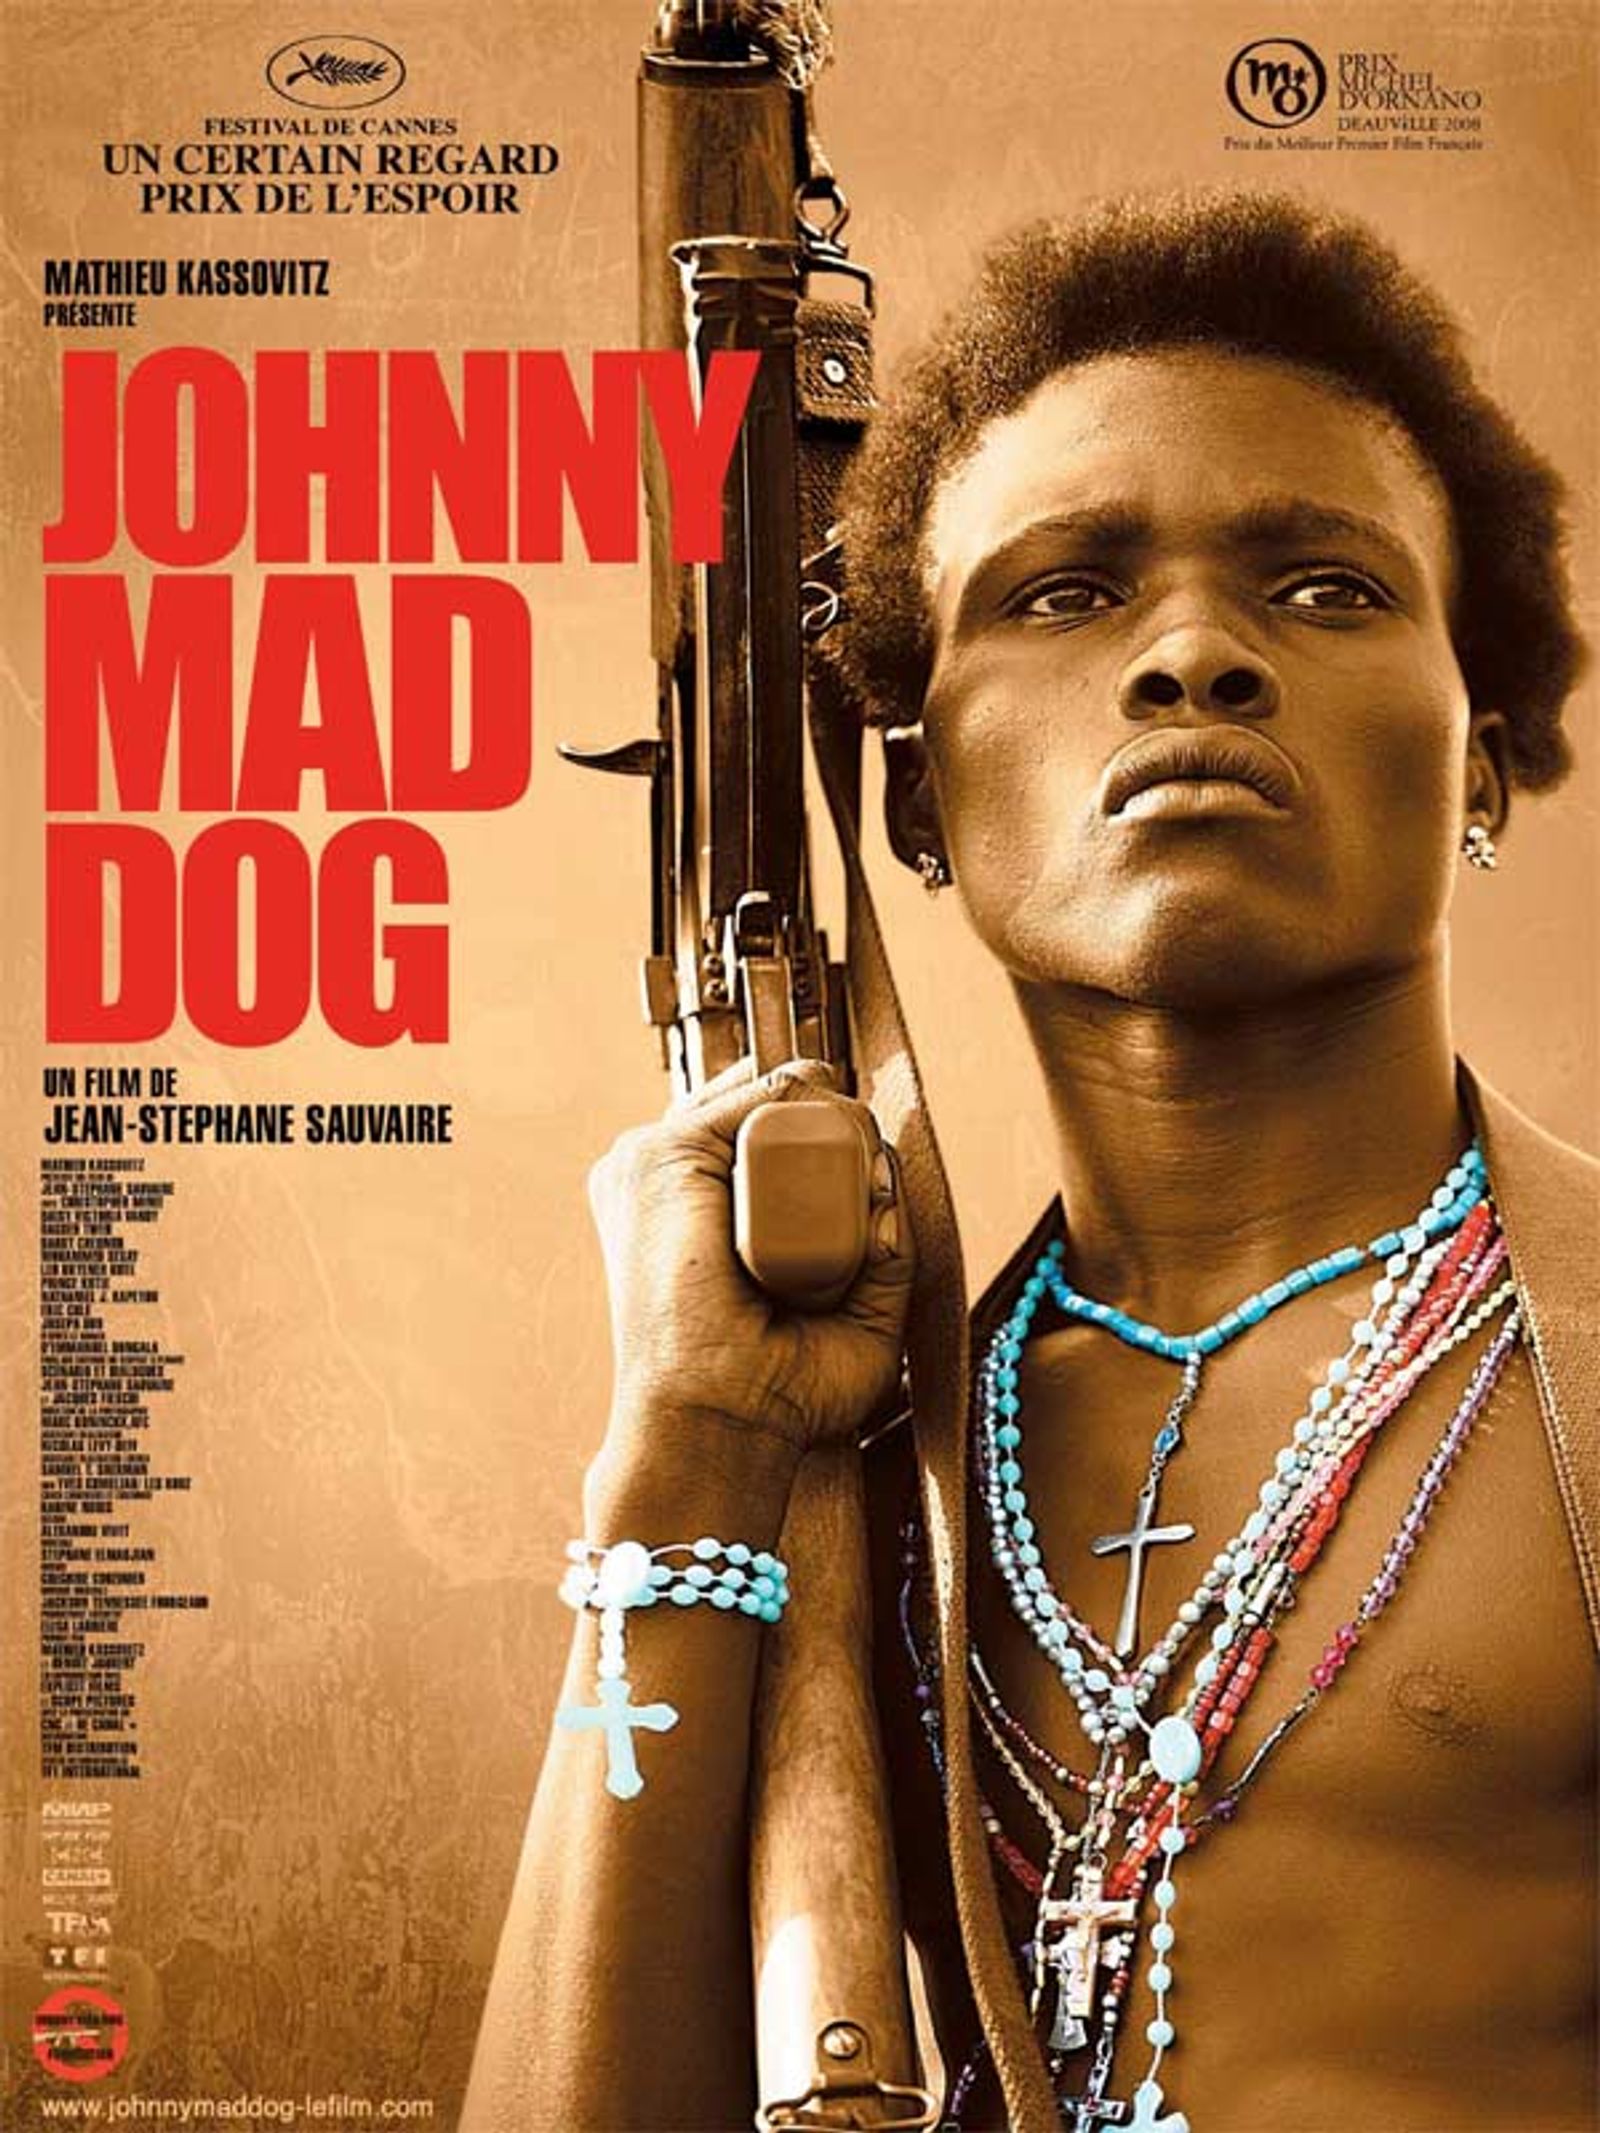 JOHNNY MAD DOG - Festival de Cannes